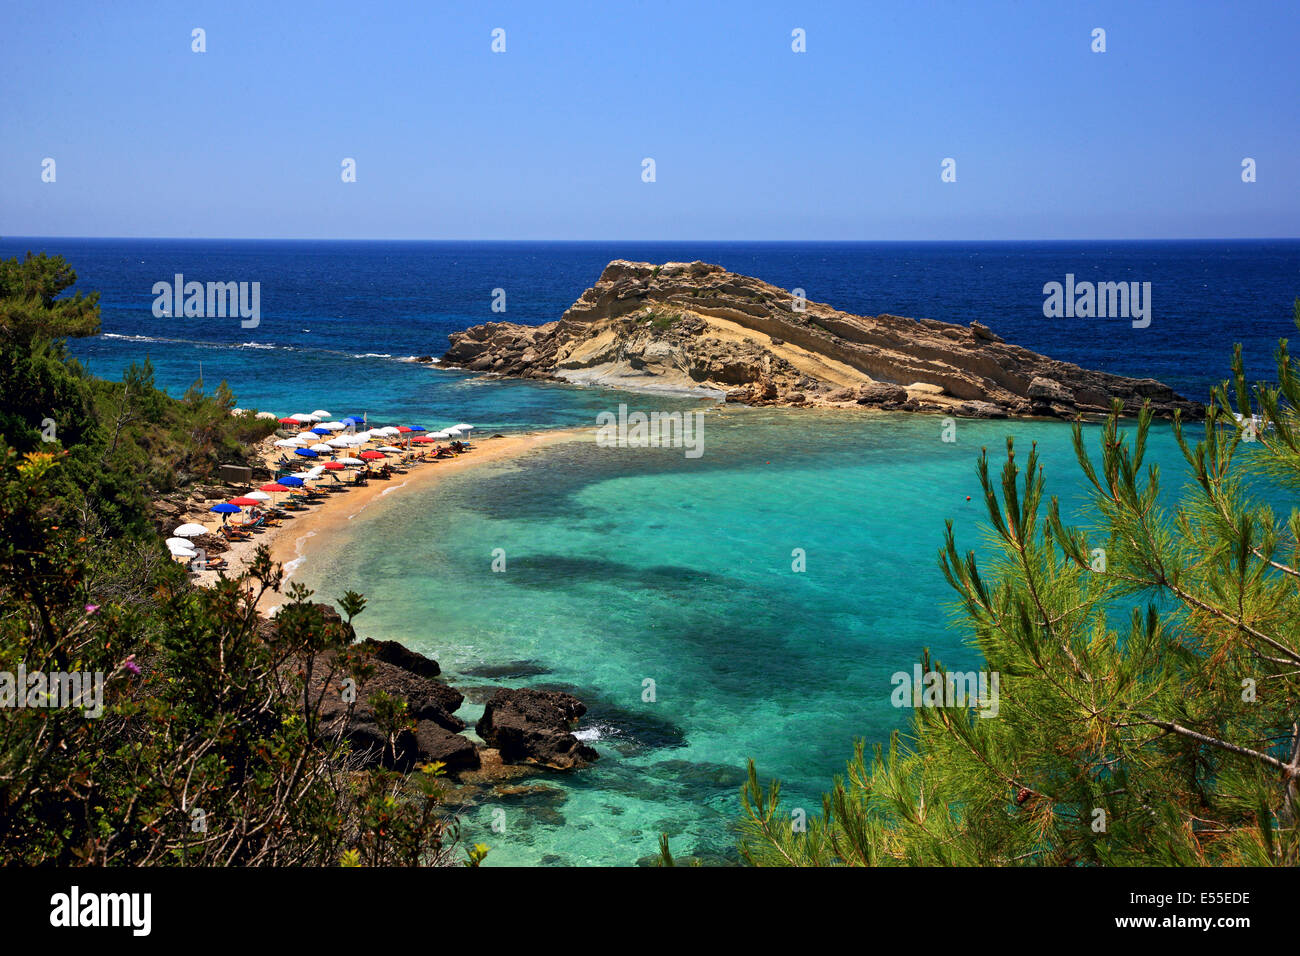 Tourkopodaro (it means 'Turkish Foot') beach, at Leivatho, close to Argostoli town, Kefalonia island, Ionian Sea, Greece Stock Photo